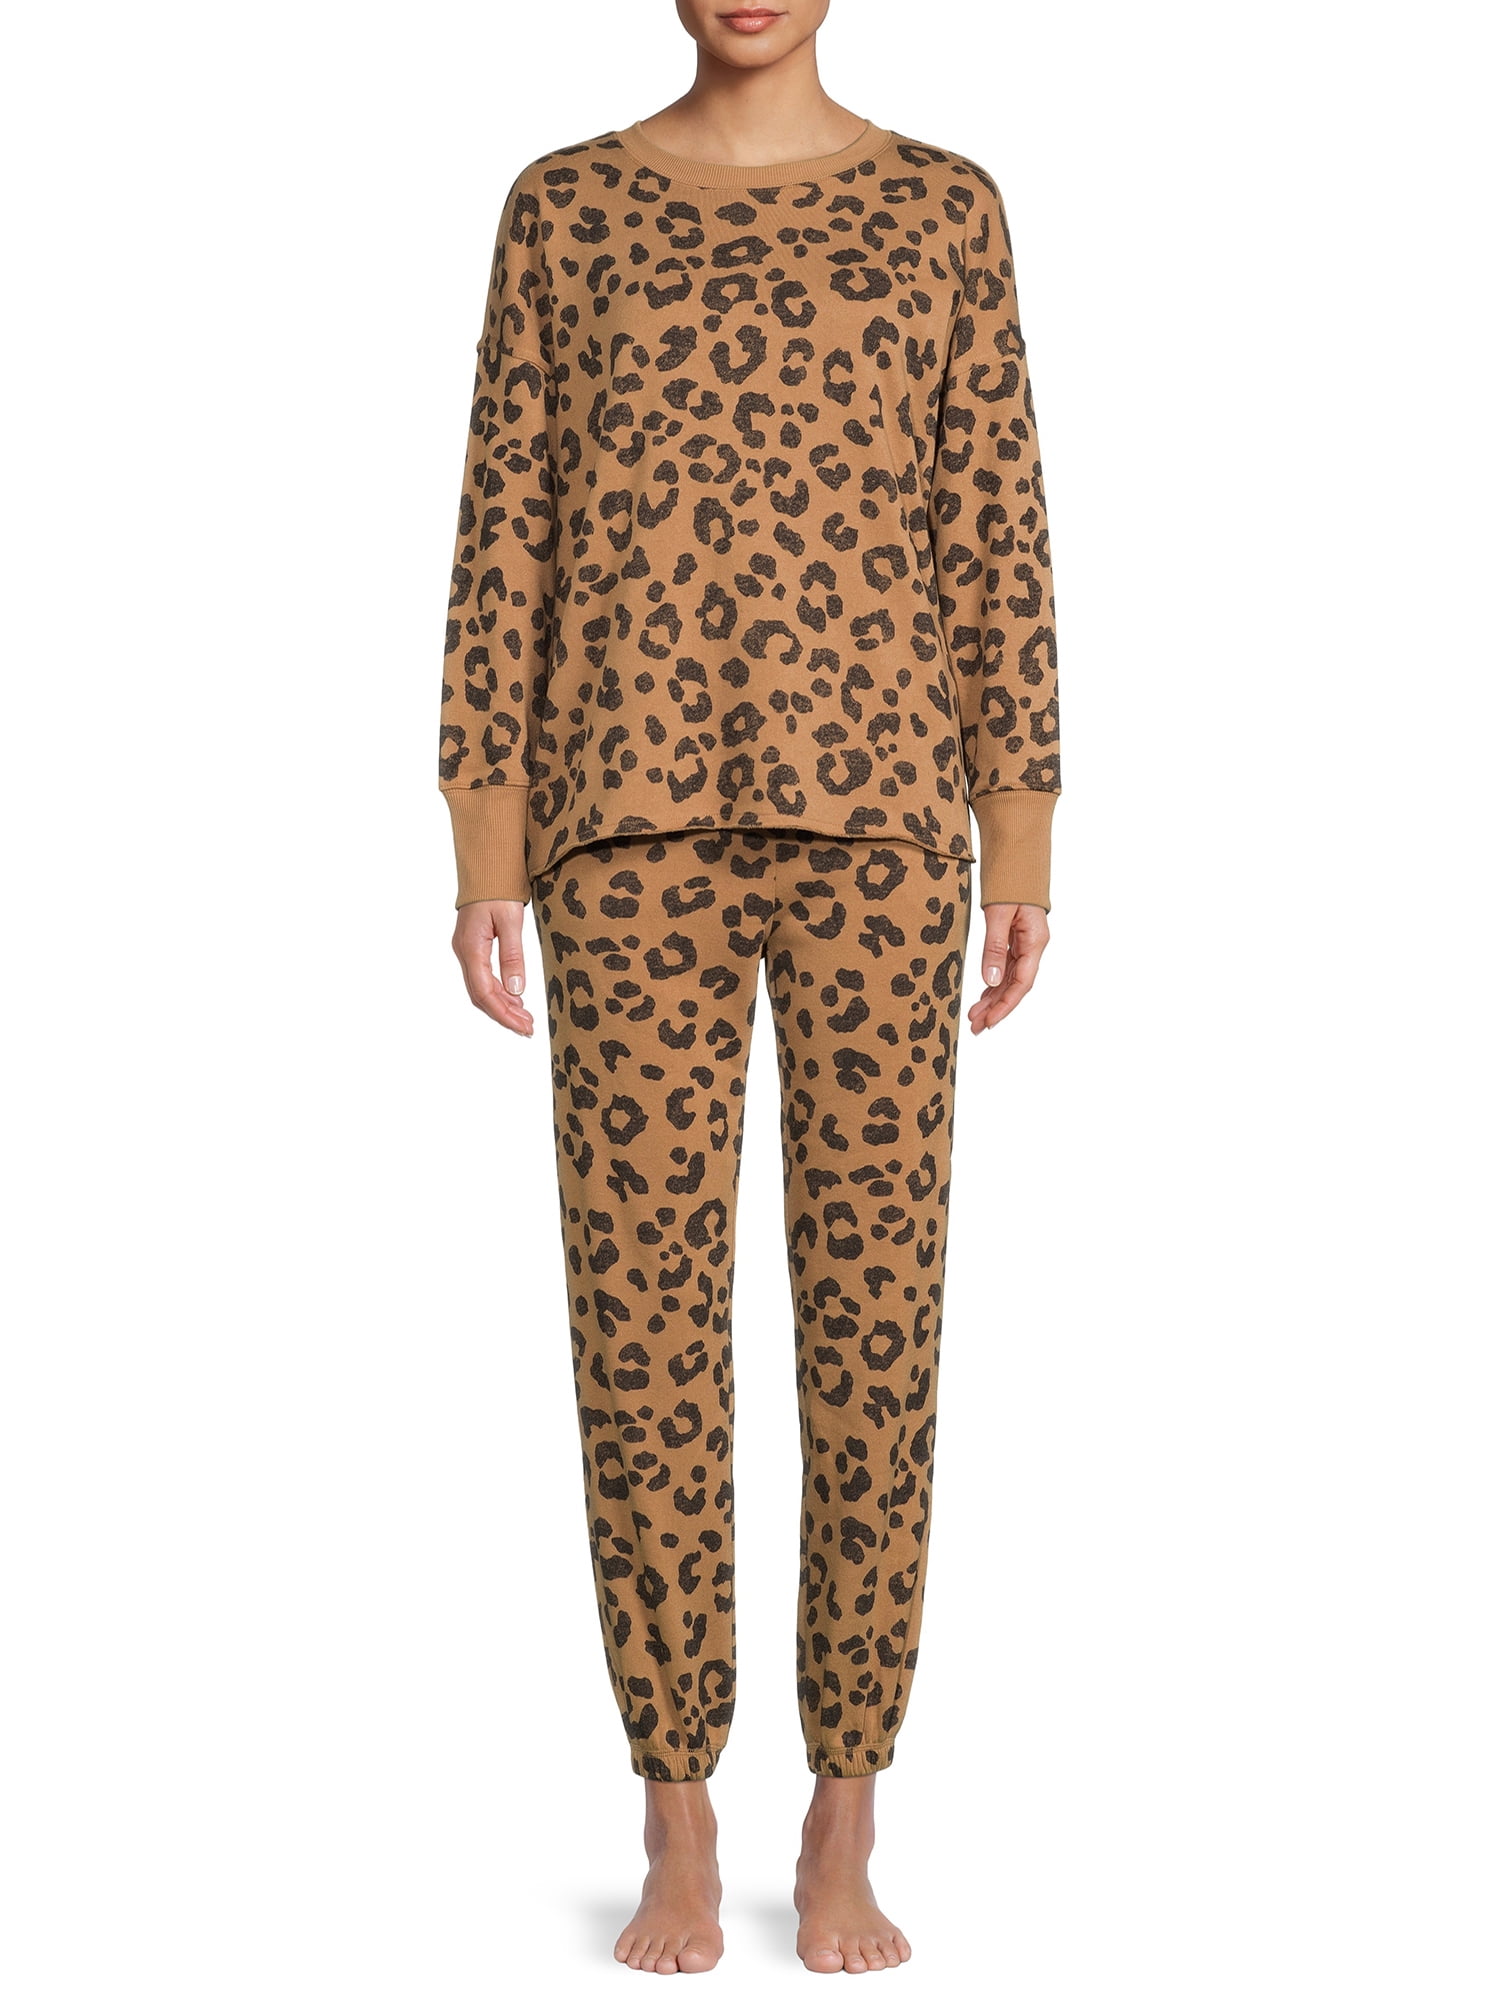 Details about   NEW Stillwater Supply Co fleece sleep pants pajama bottoms Black Girl's Size 10 